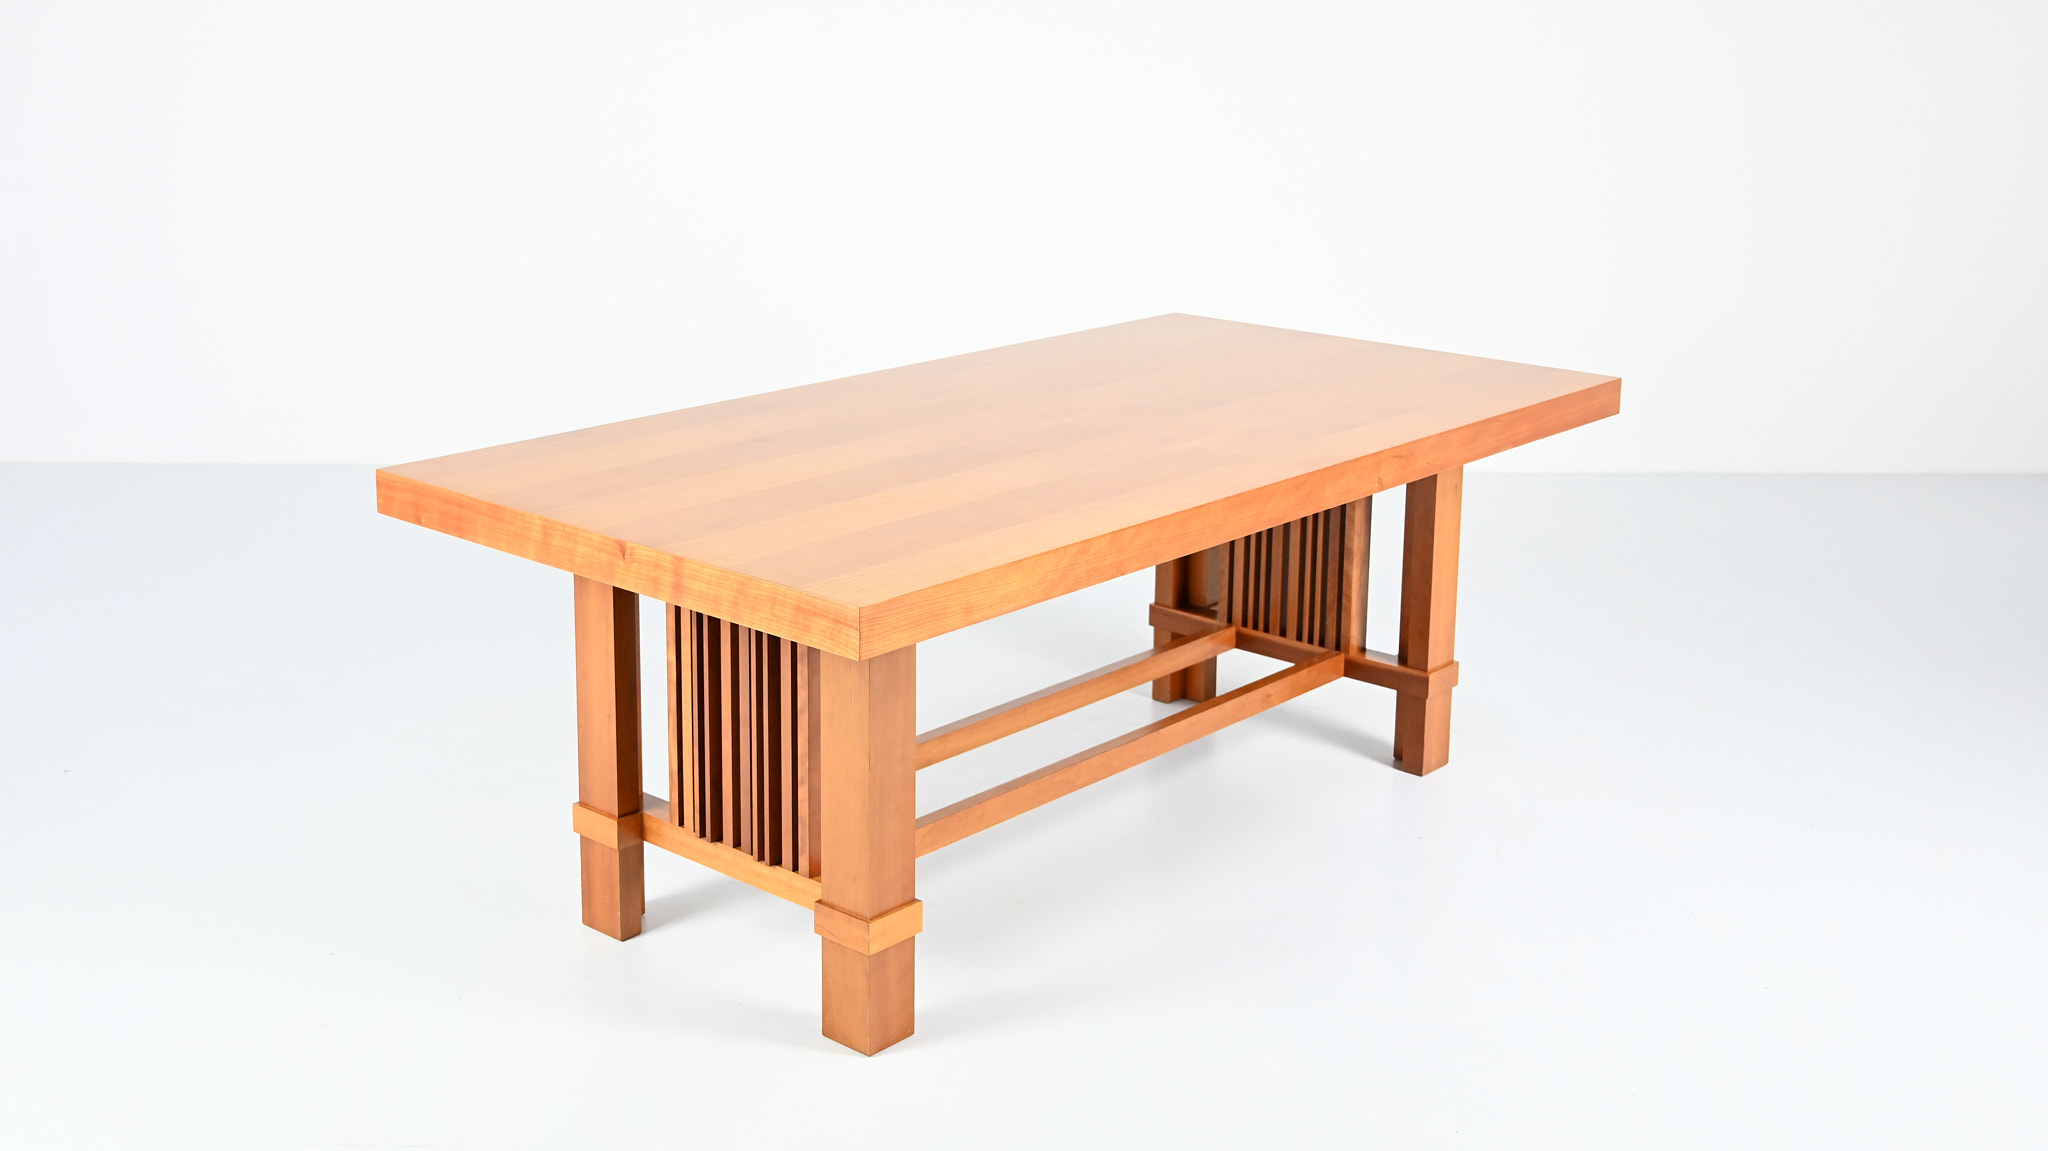 taliesin cassina table frank lloyd wright modernism design prairie style allen architecture